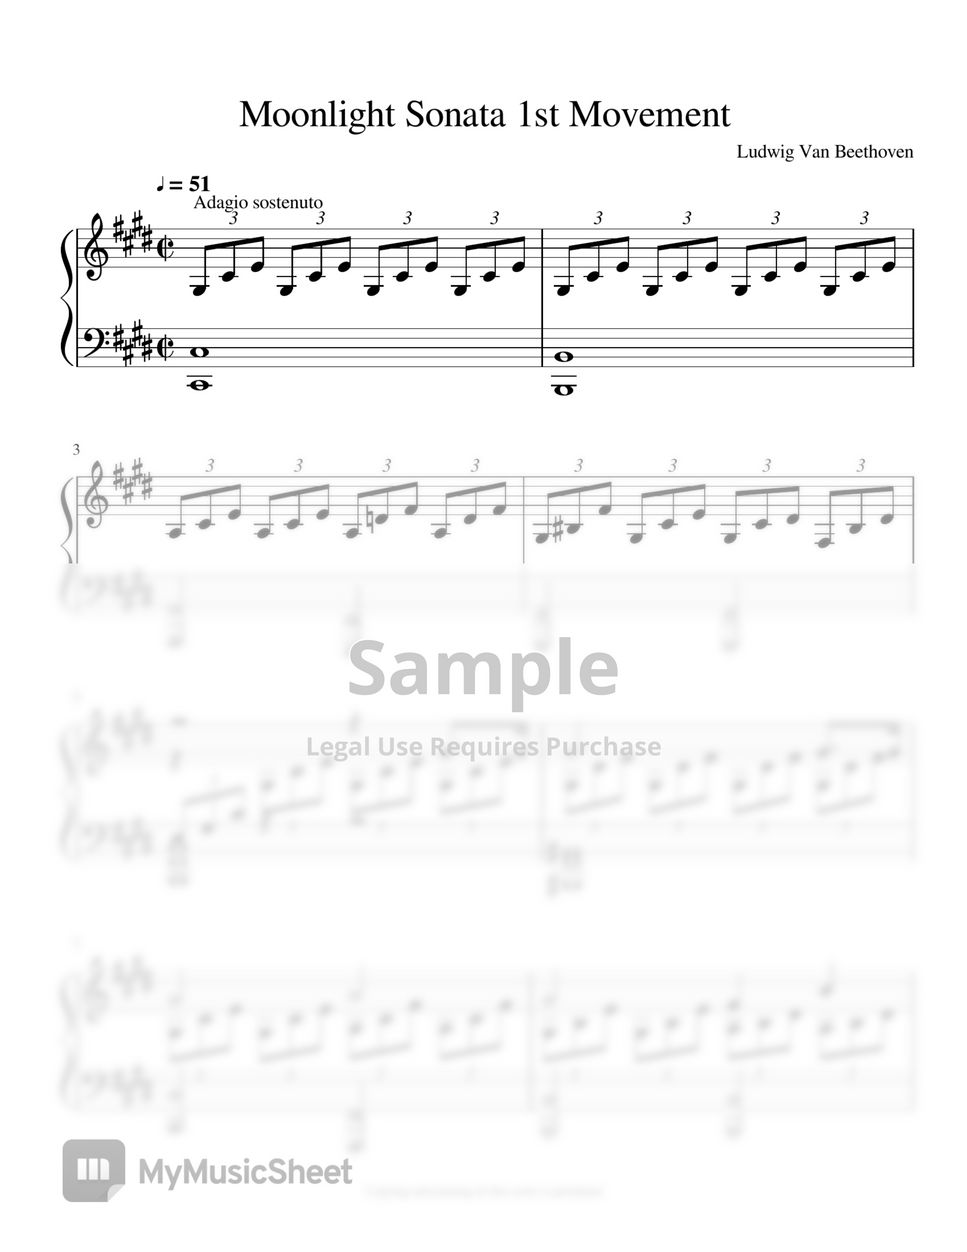 Ludwig Van Beethoven - Opus 27 No 2 Moonlight Sonata 1st movement by Ludwig Van Beethoven